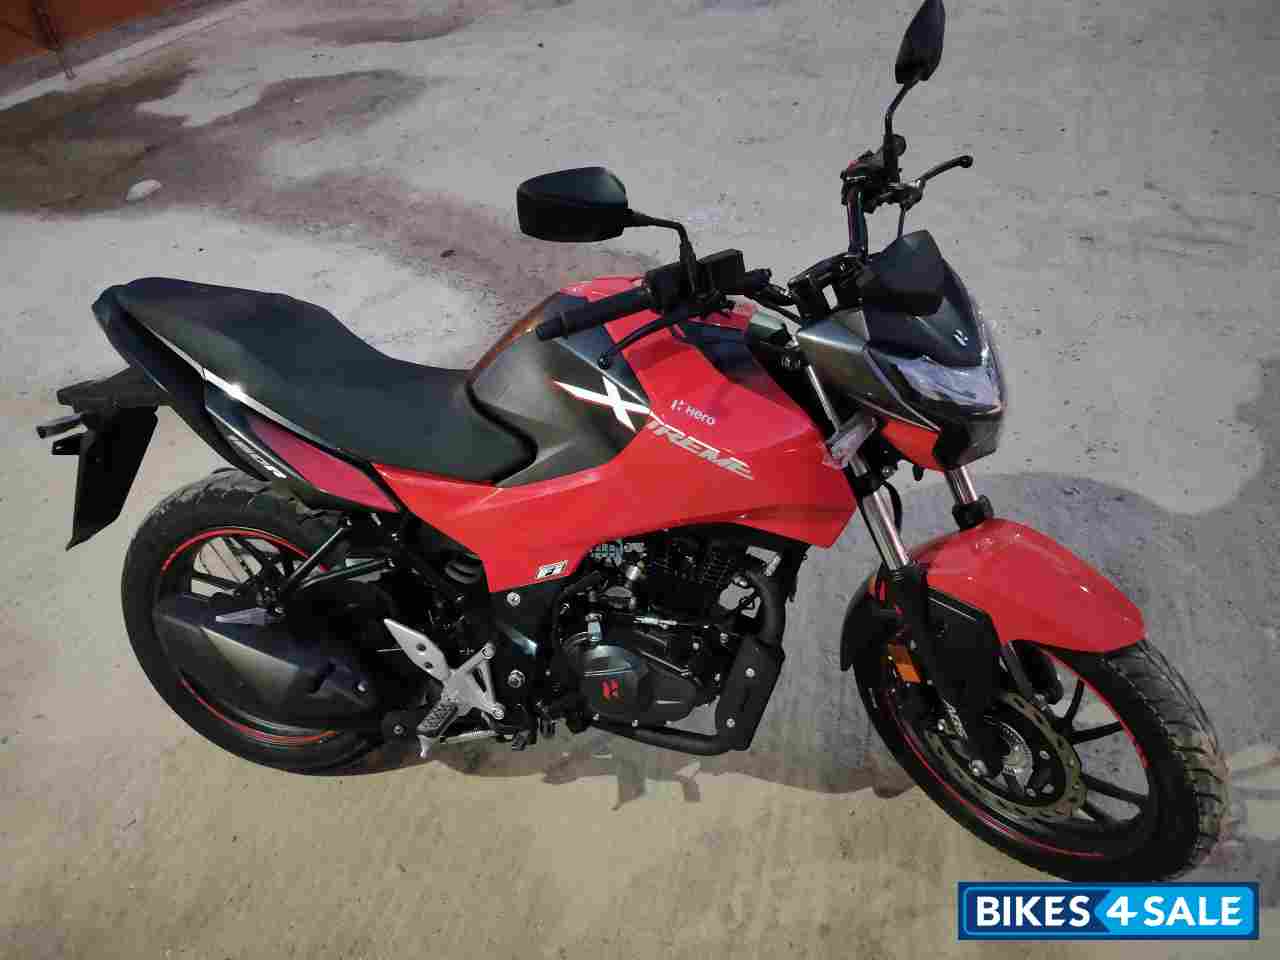 Used Model Hero Xtreme 160r For Sale In Khagaria Id Bikes4sale